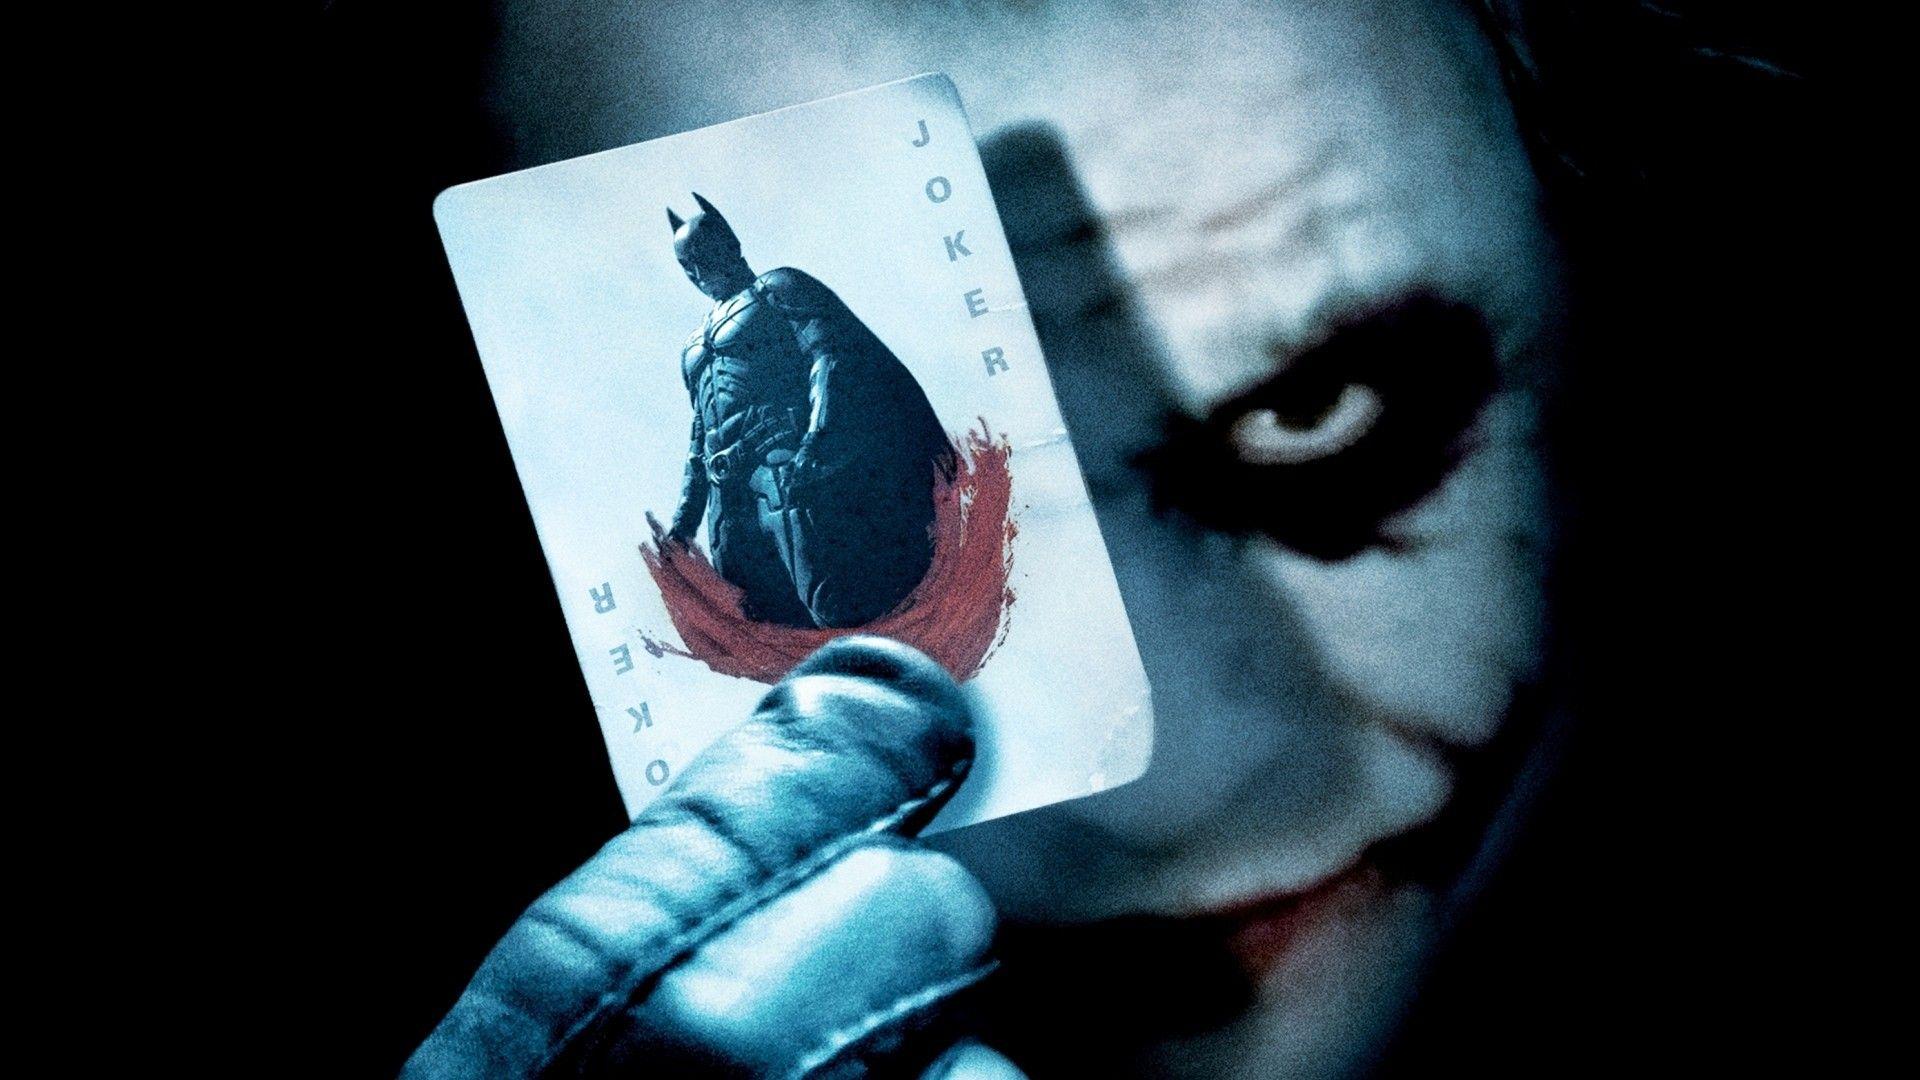 Joker Cool Image Wallpaper